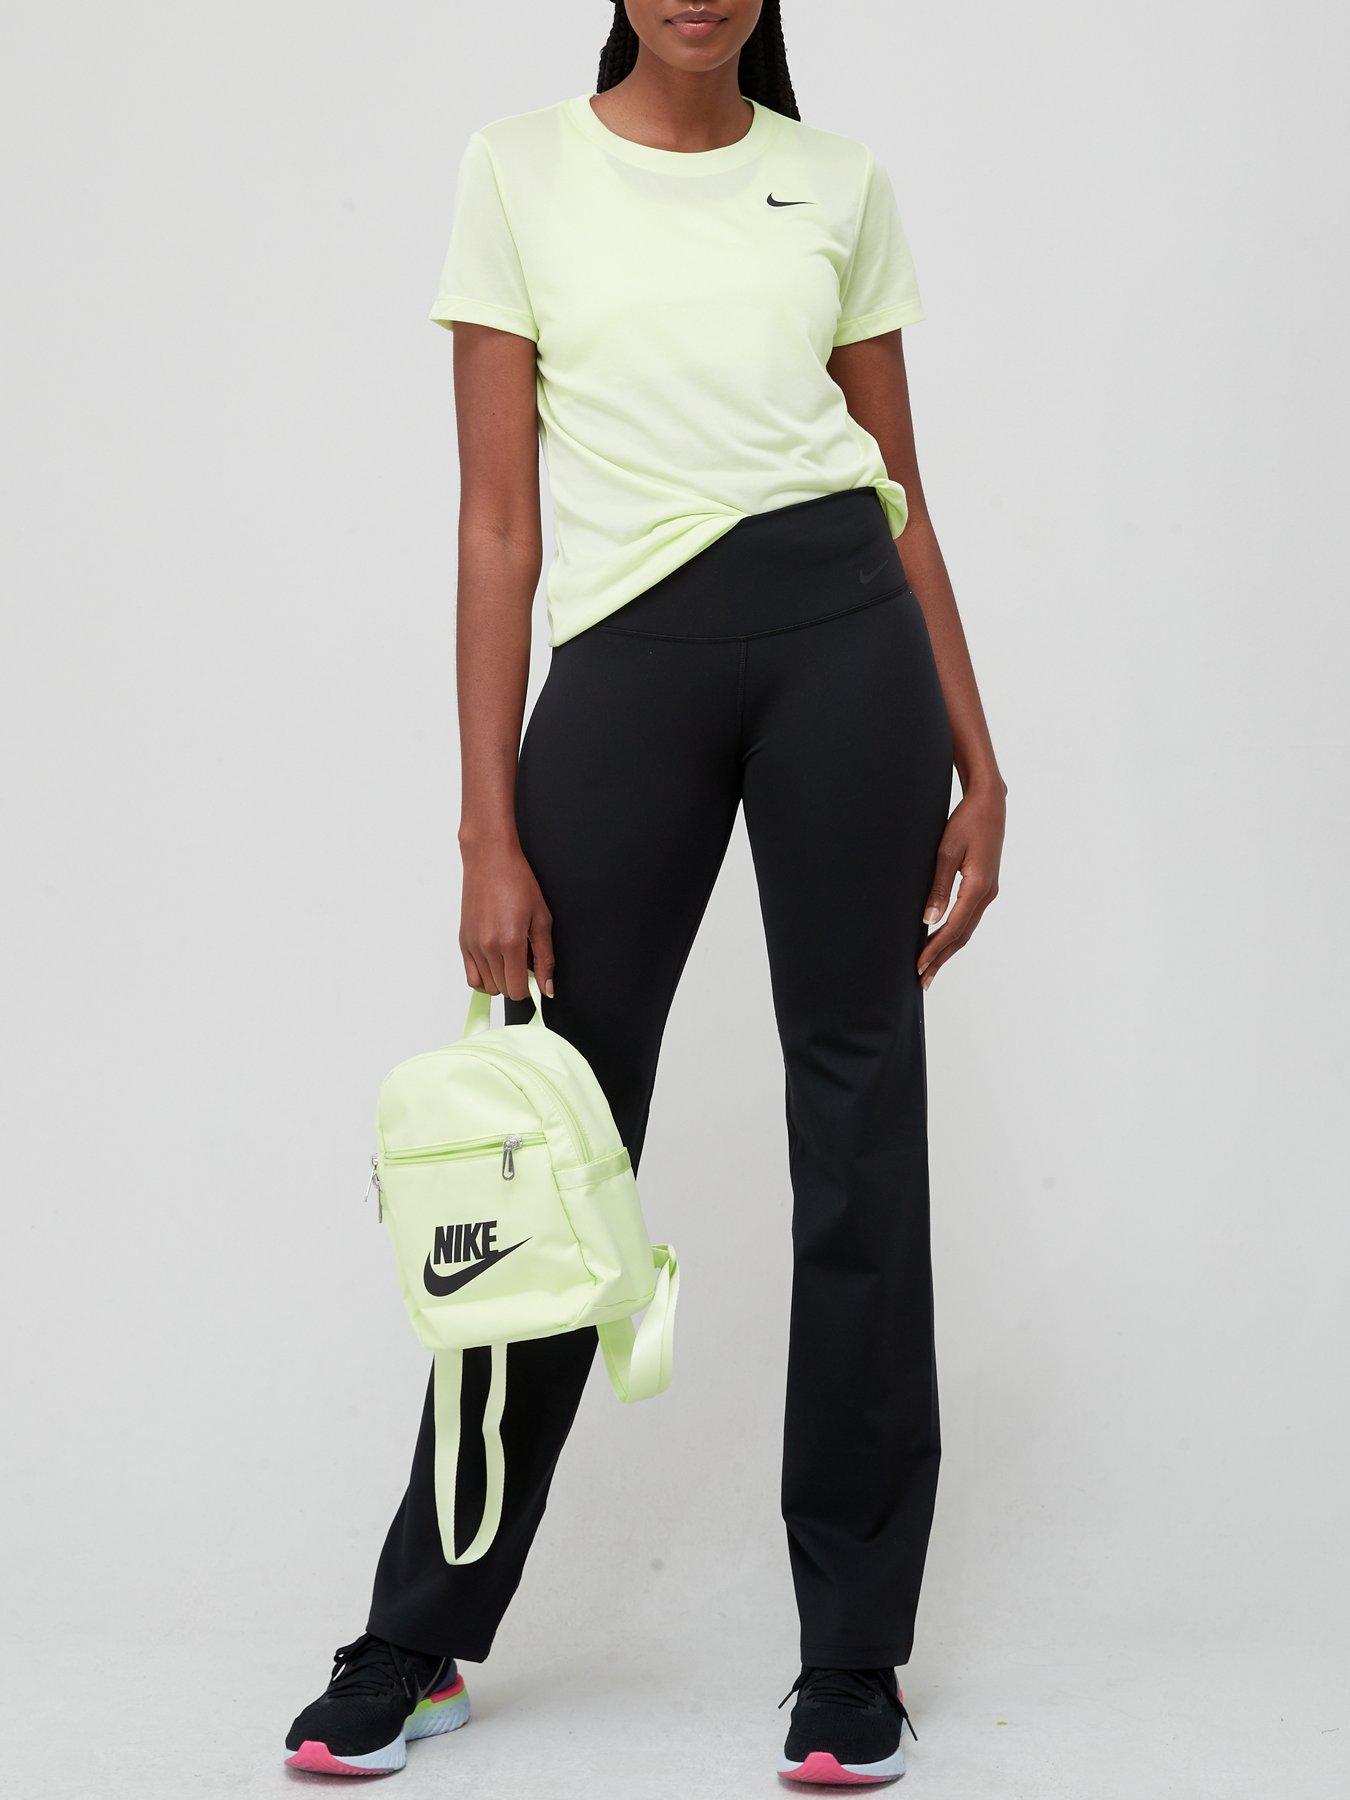 Nike Training Power Classic Pants - Black